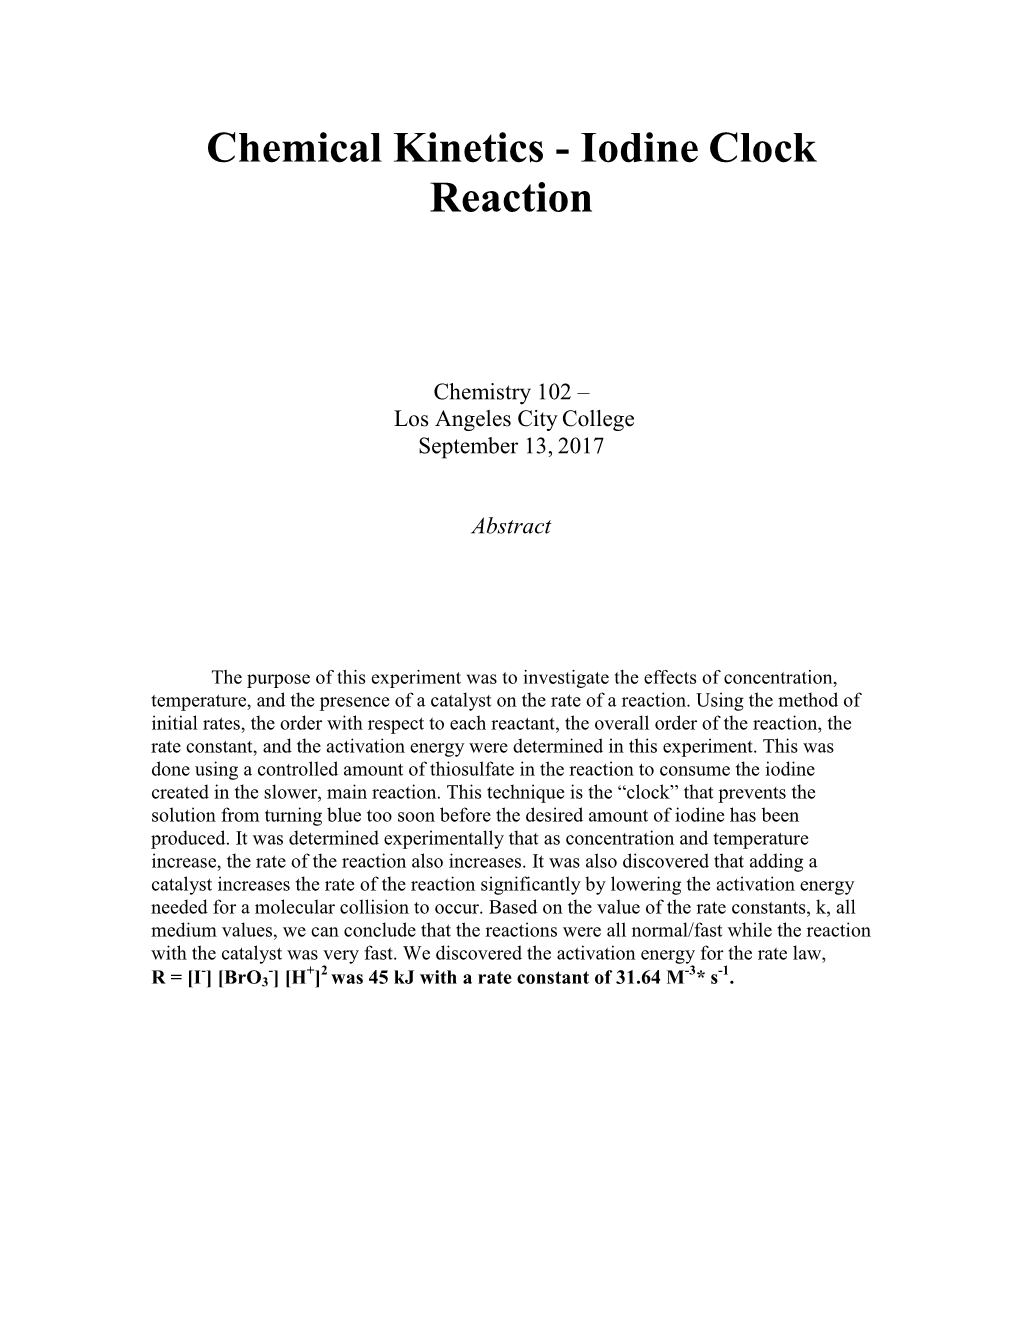 Chemical Kinetics - Iodine Clock Reaction